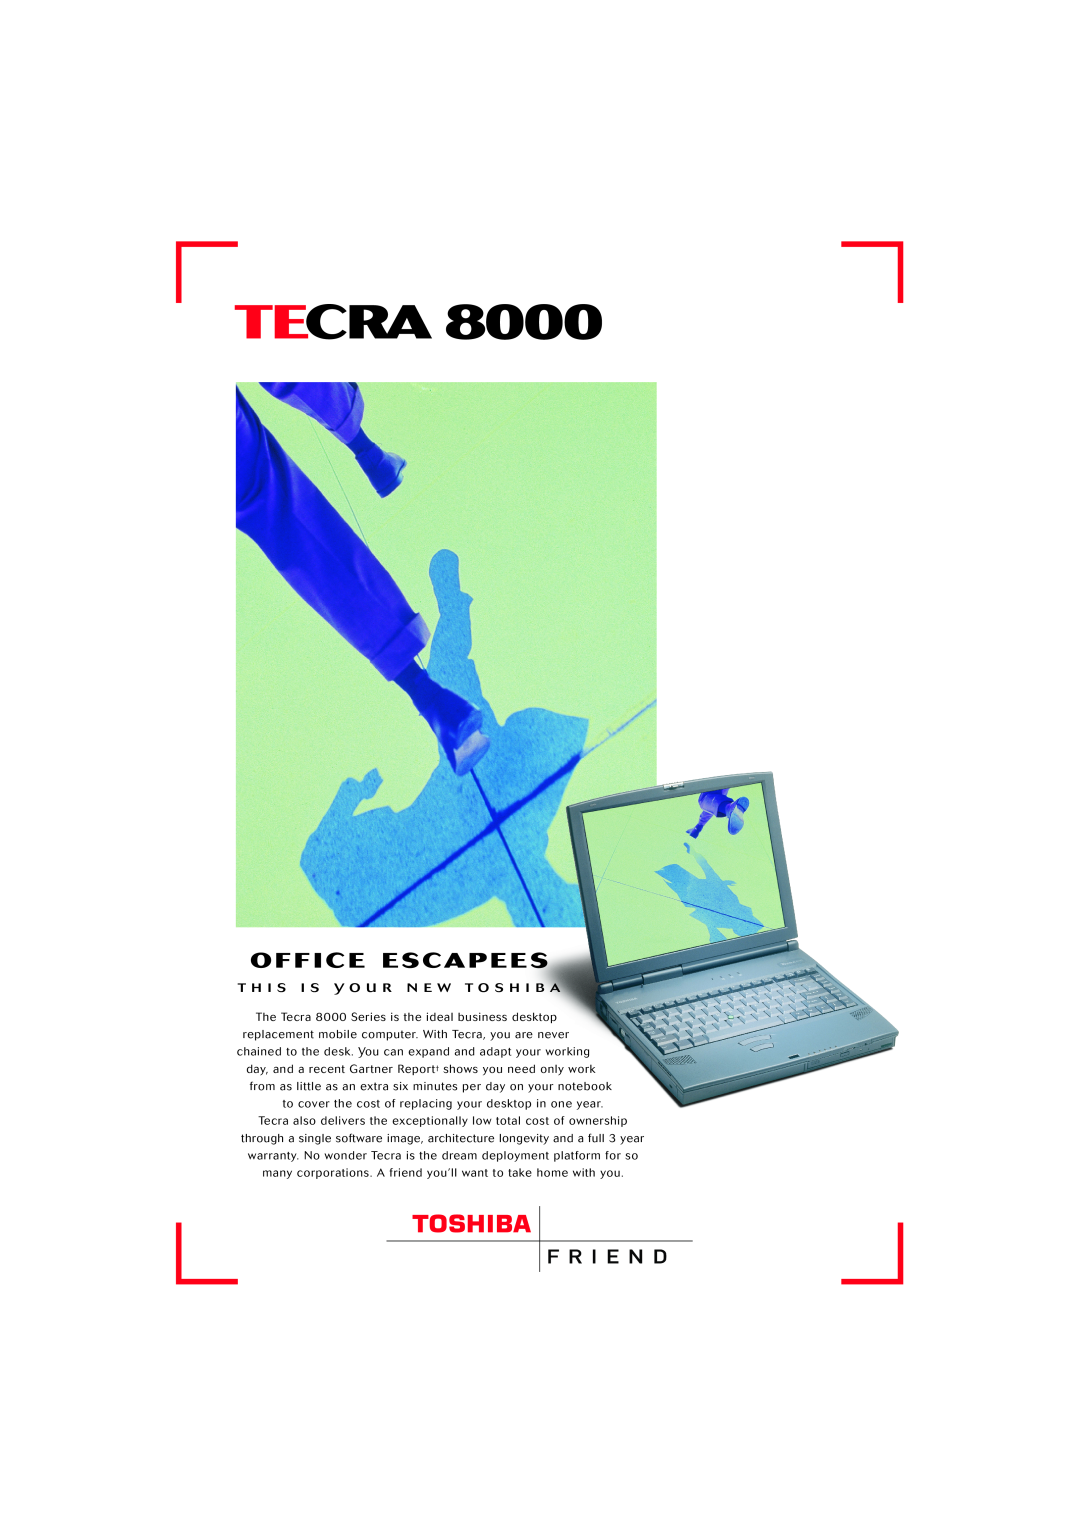 Toshiba 8000 warranty Tecra, Office Escapees, T H I S I S Y O U R N E W T O S H I B A 